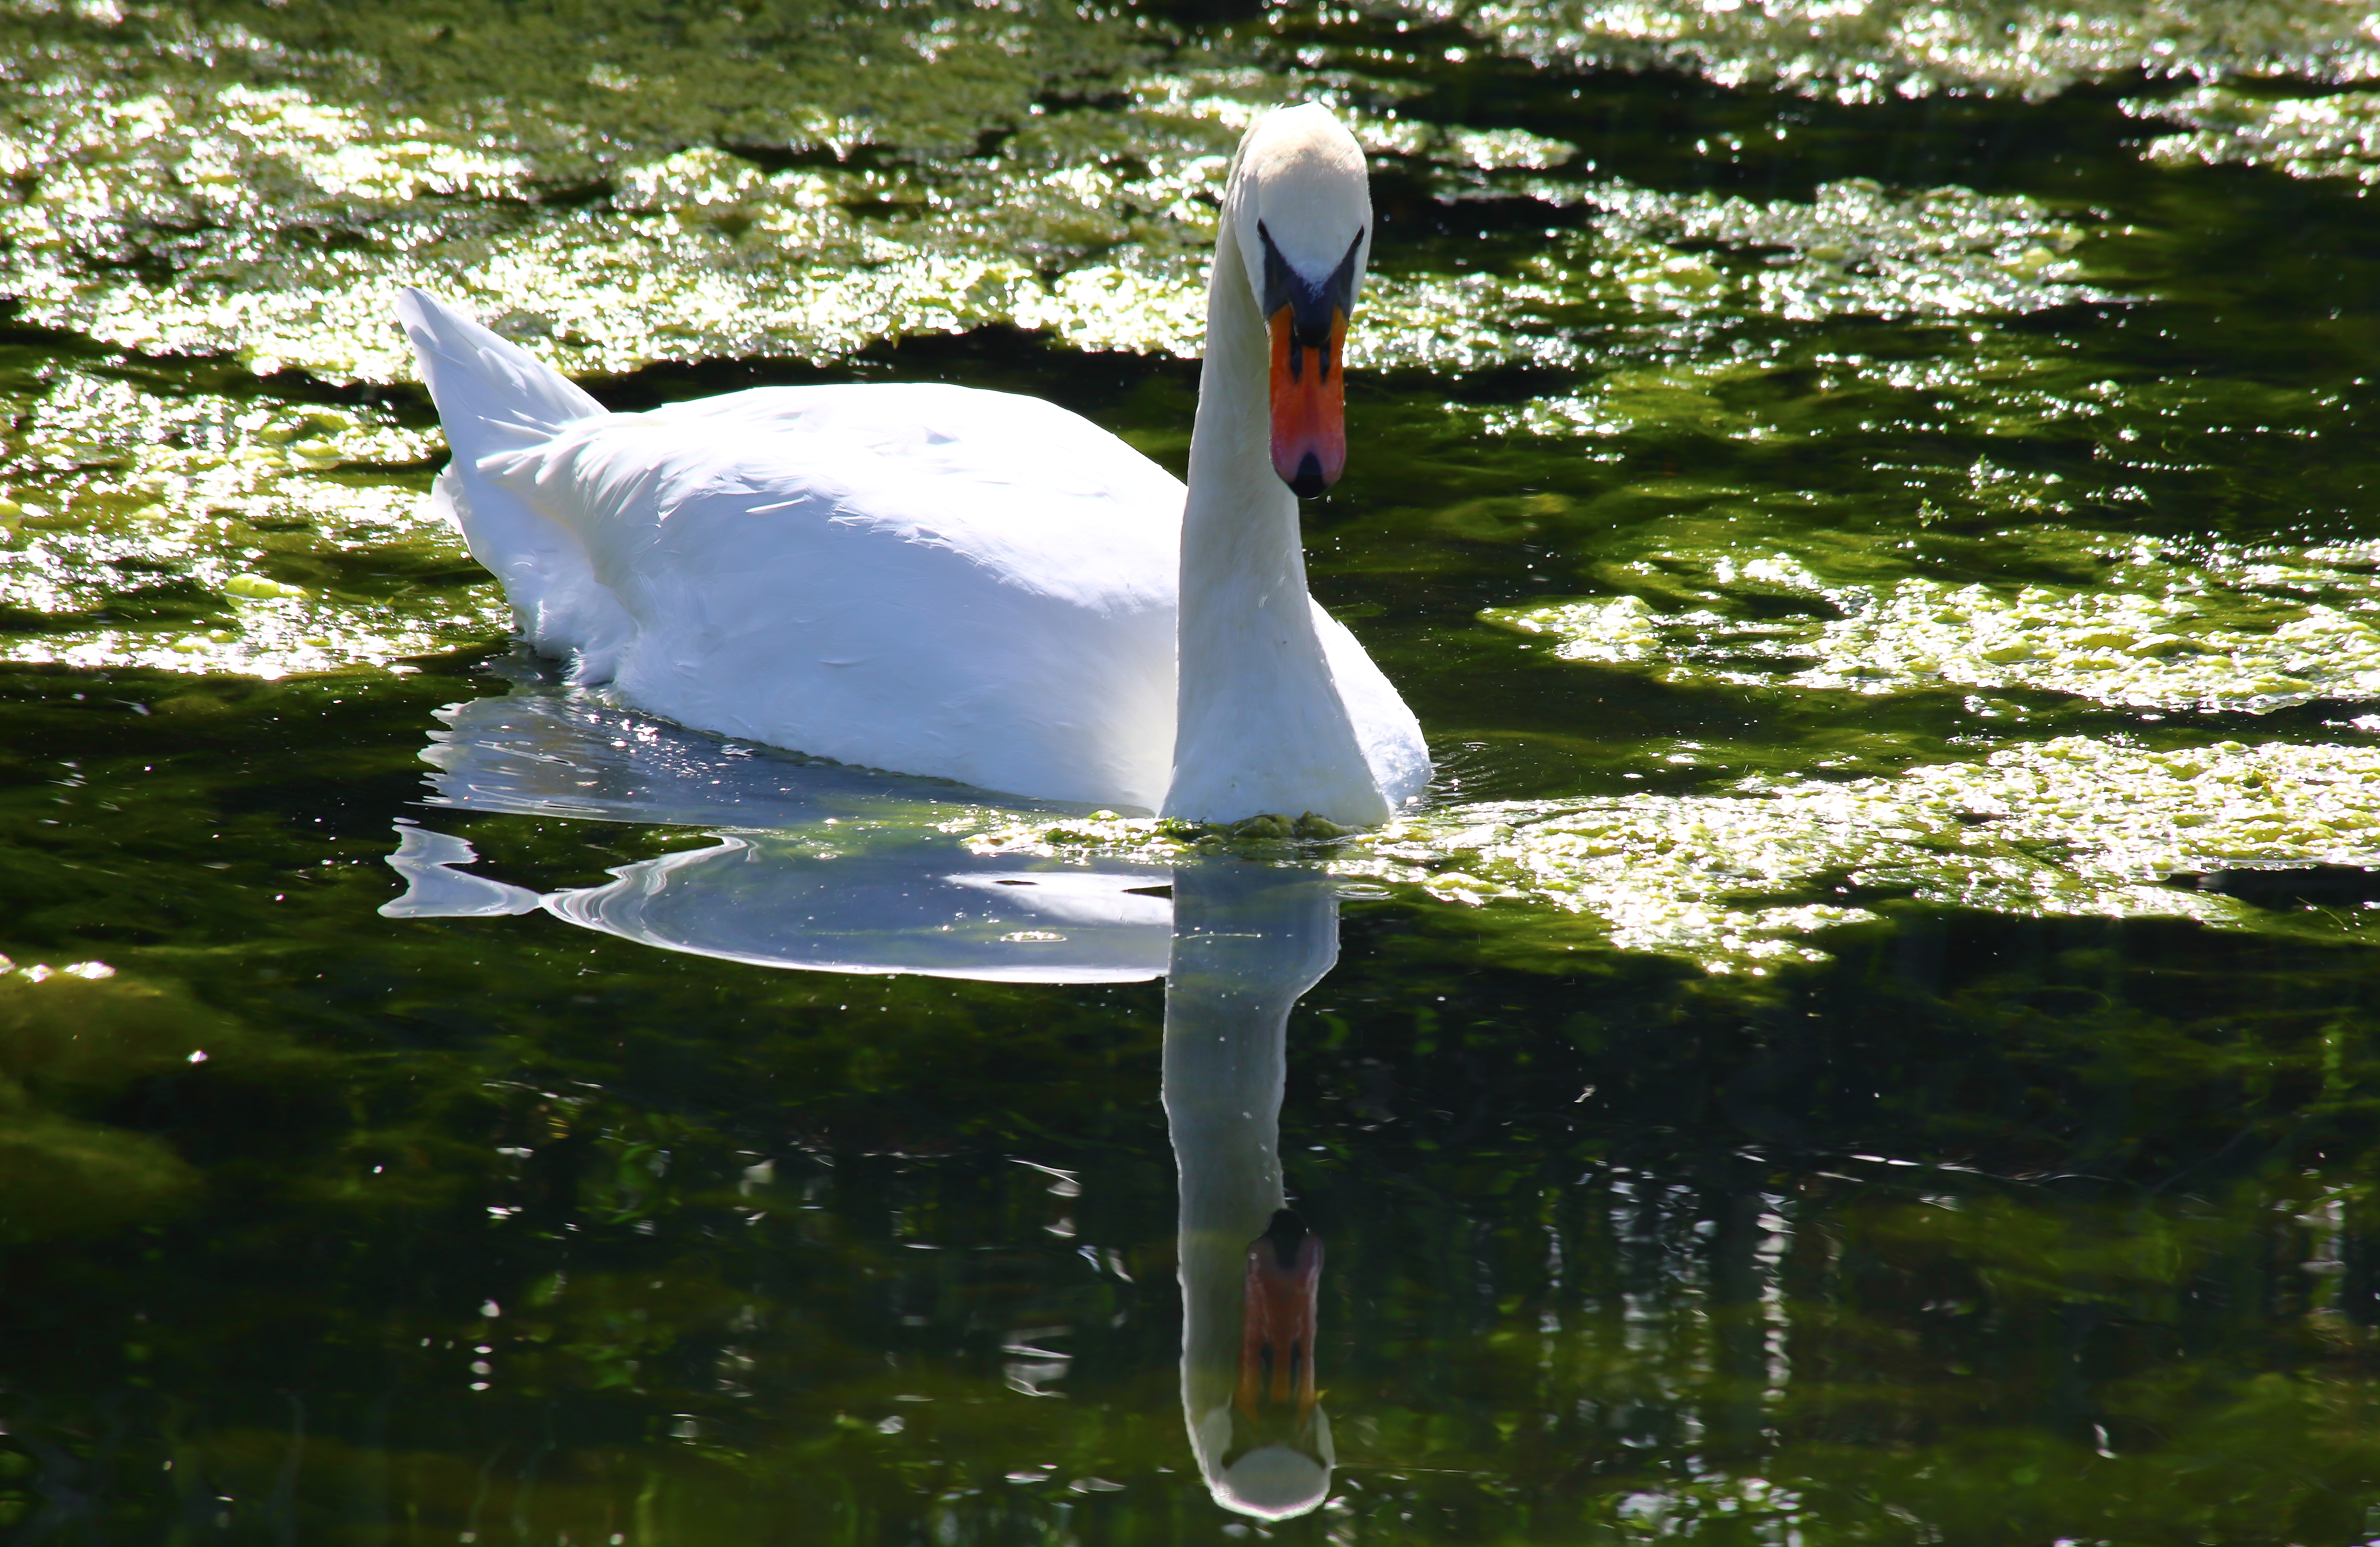 Swan at Painshill Park. Copyright Chris Bushe 2015